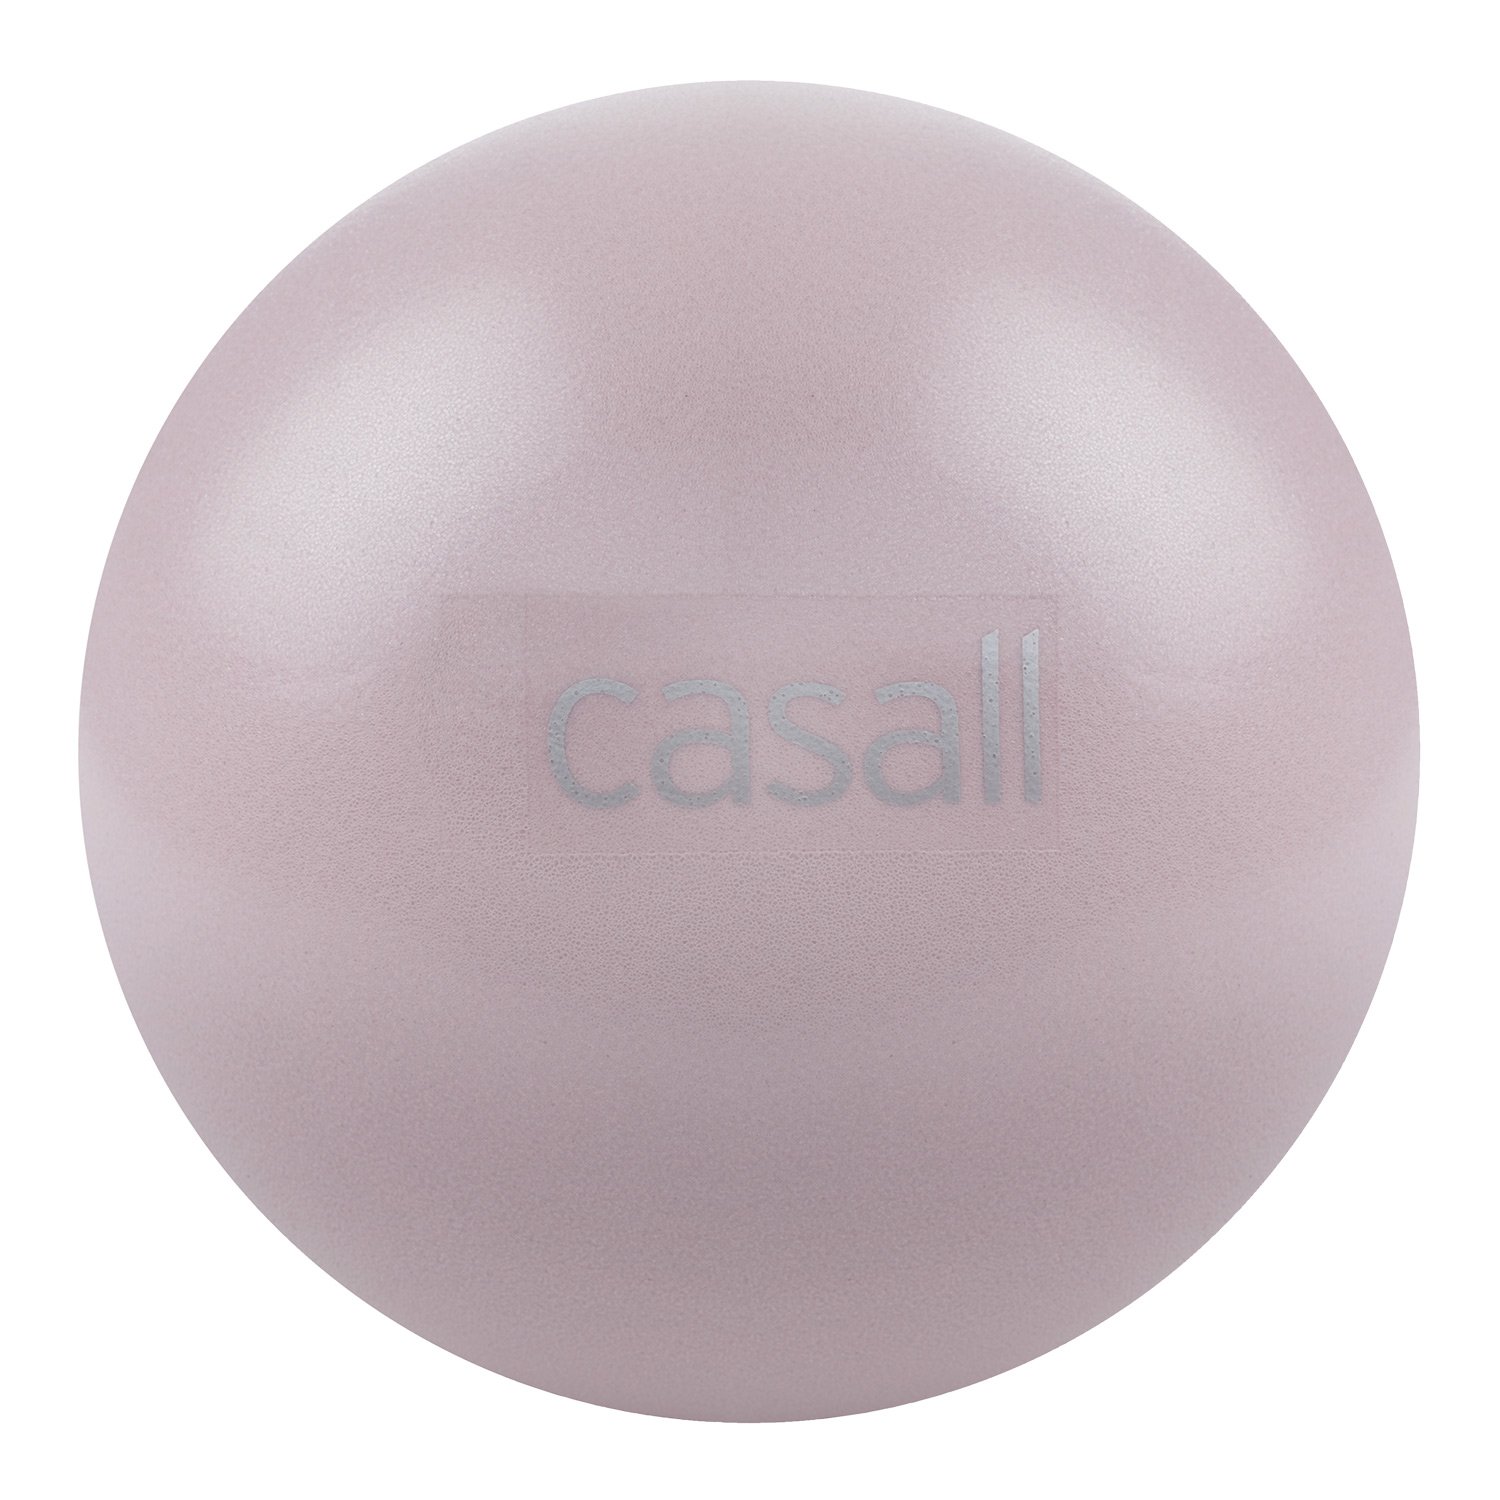 Casall Body toning ball Soft lilac